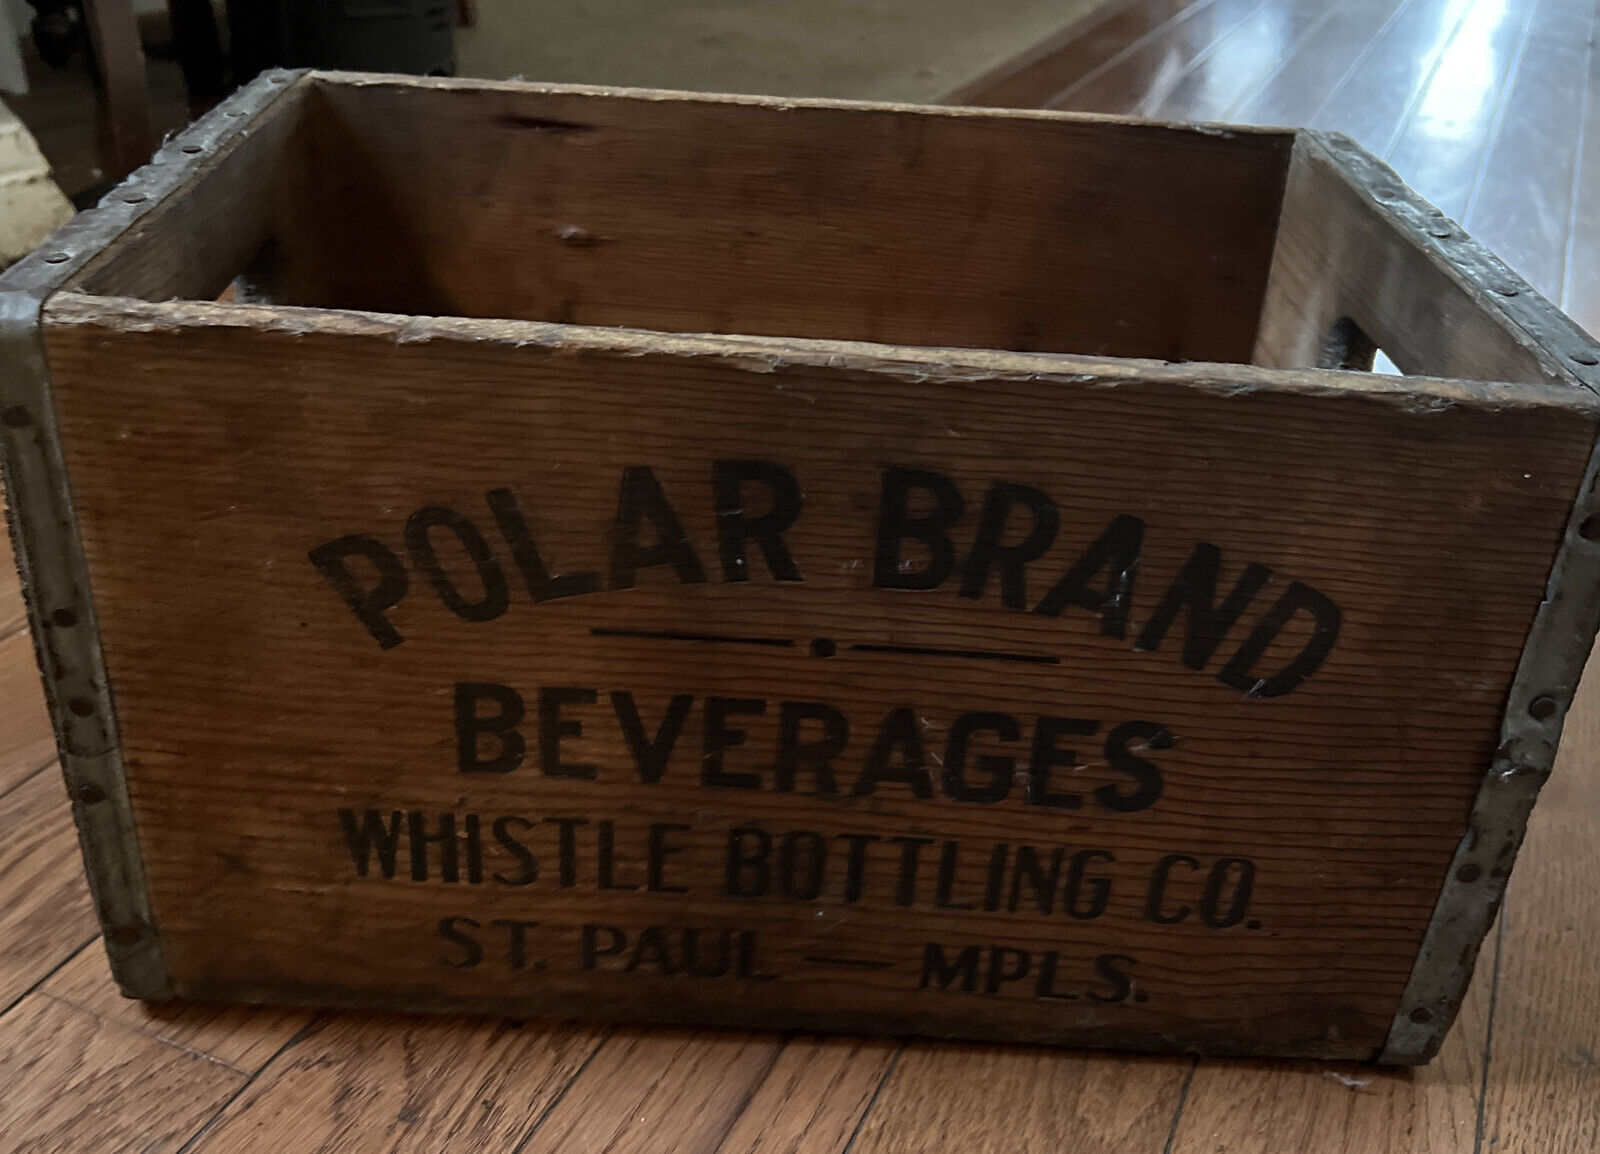 Vintage Polar Brand Beverages Whistle Bottling Co St Paul MPLS Wood Box Crate